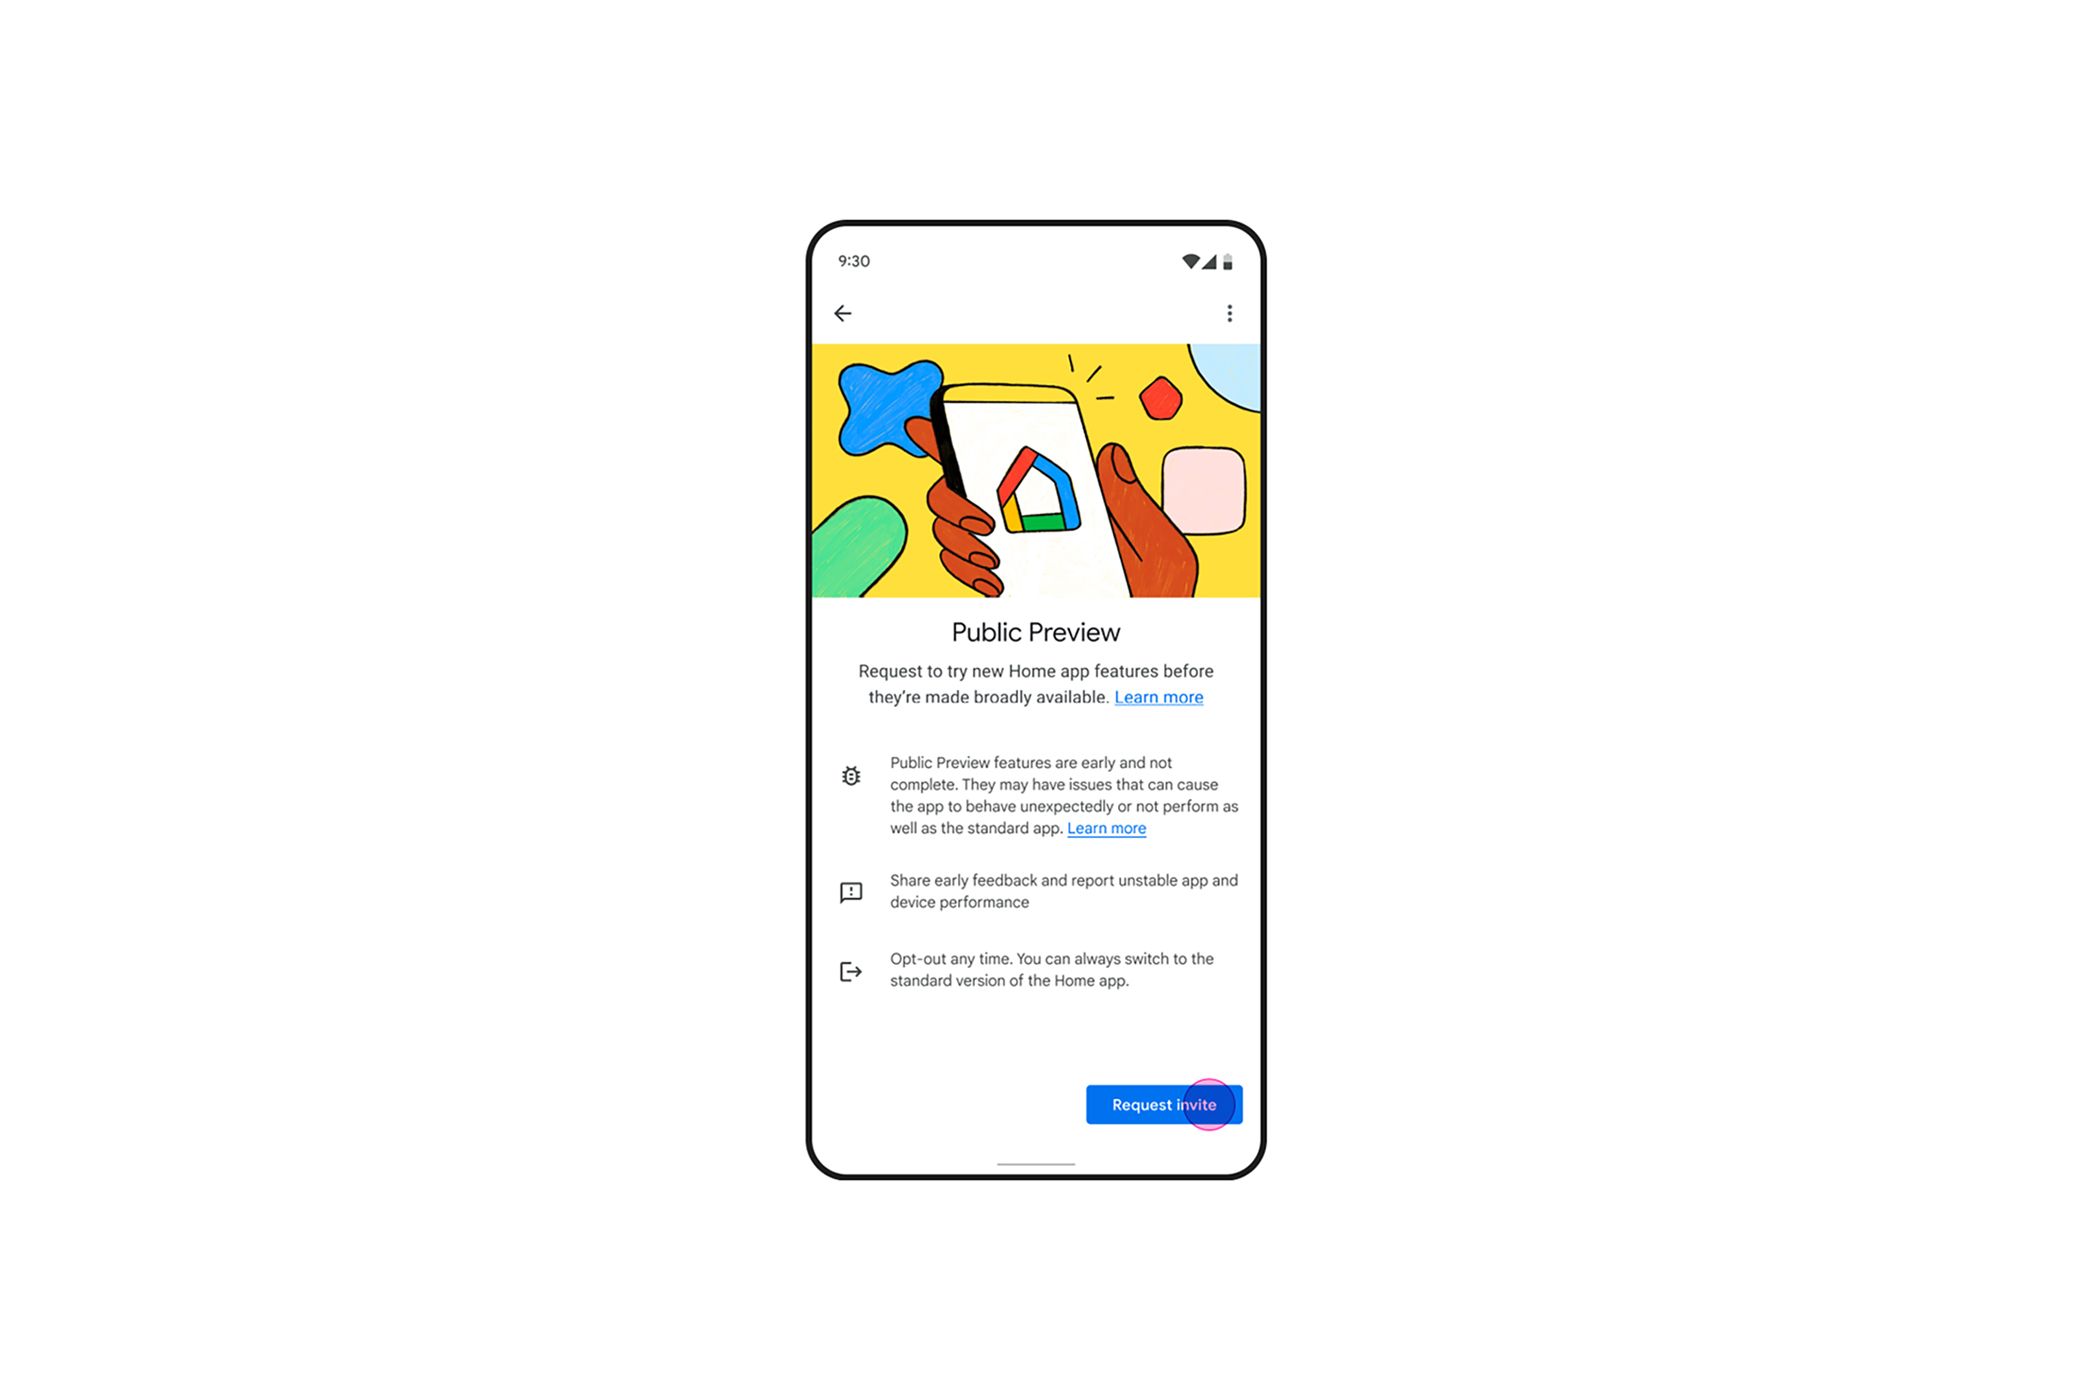 Google Home app Public Preview request invite screenshot on white background.